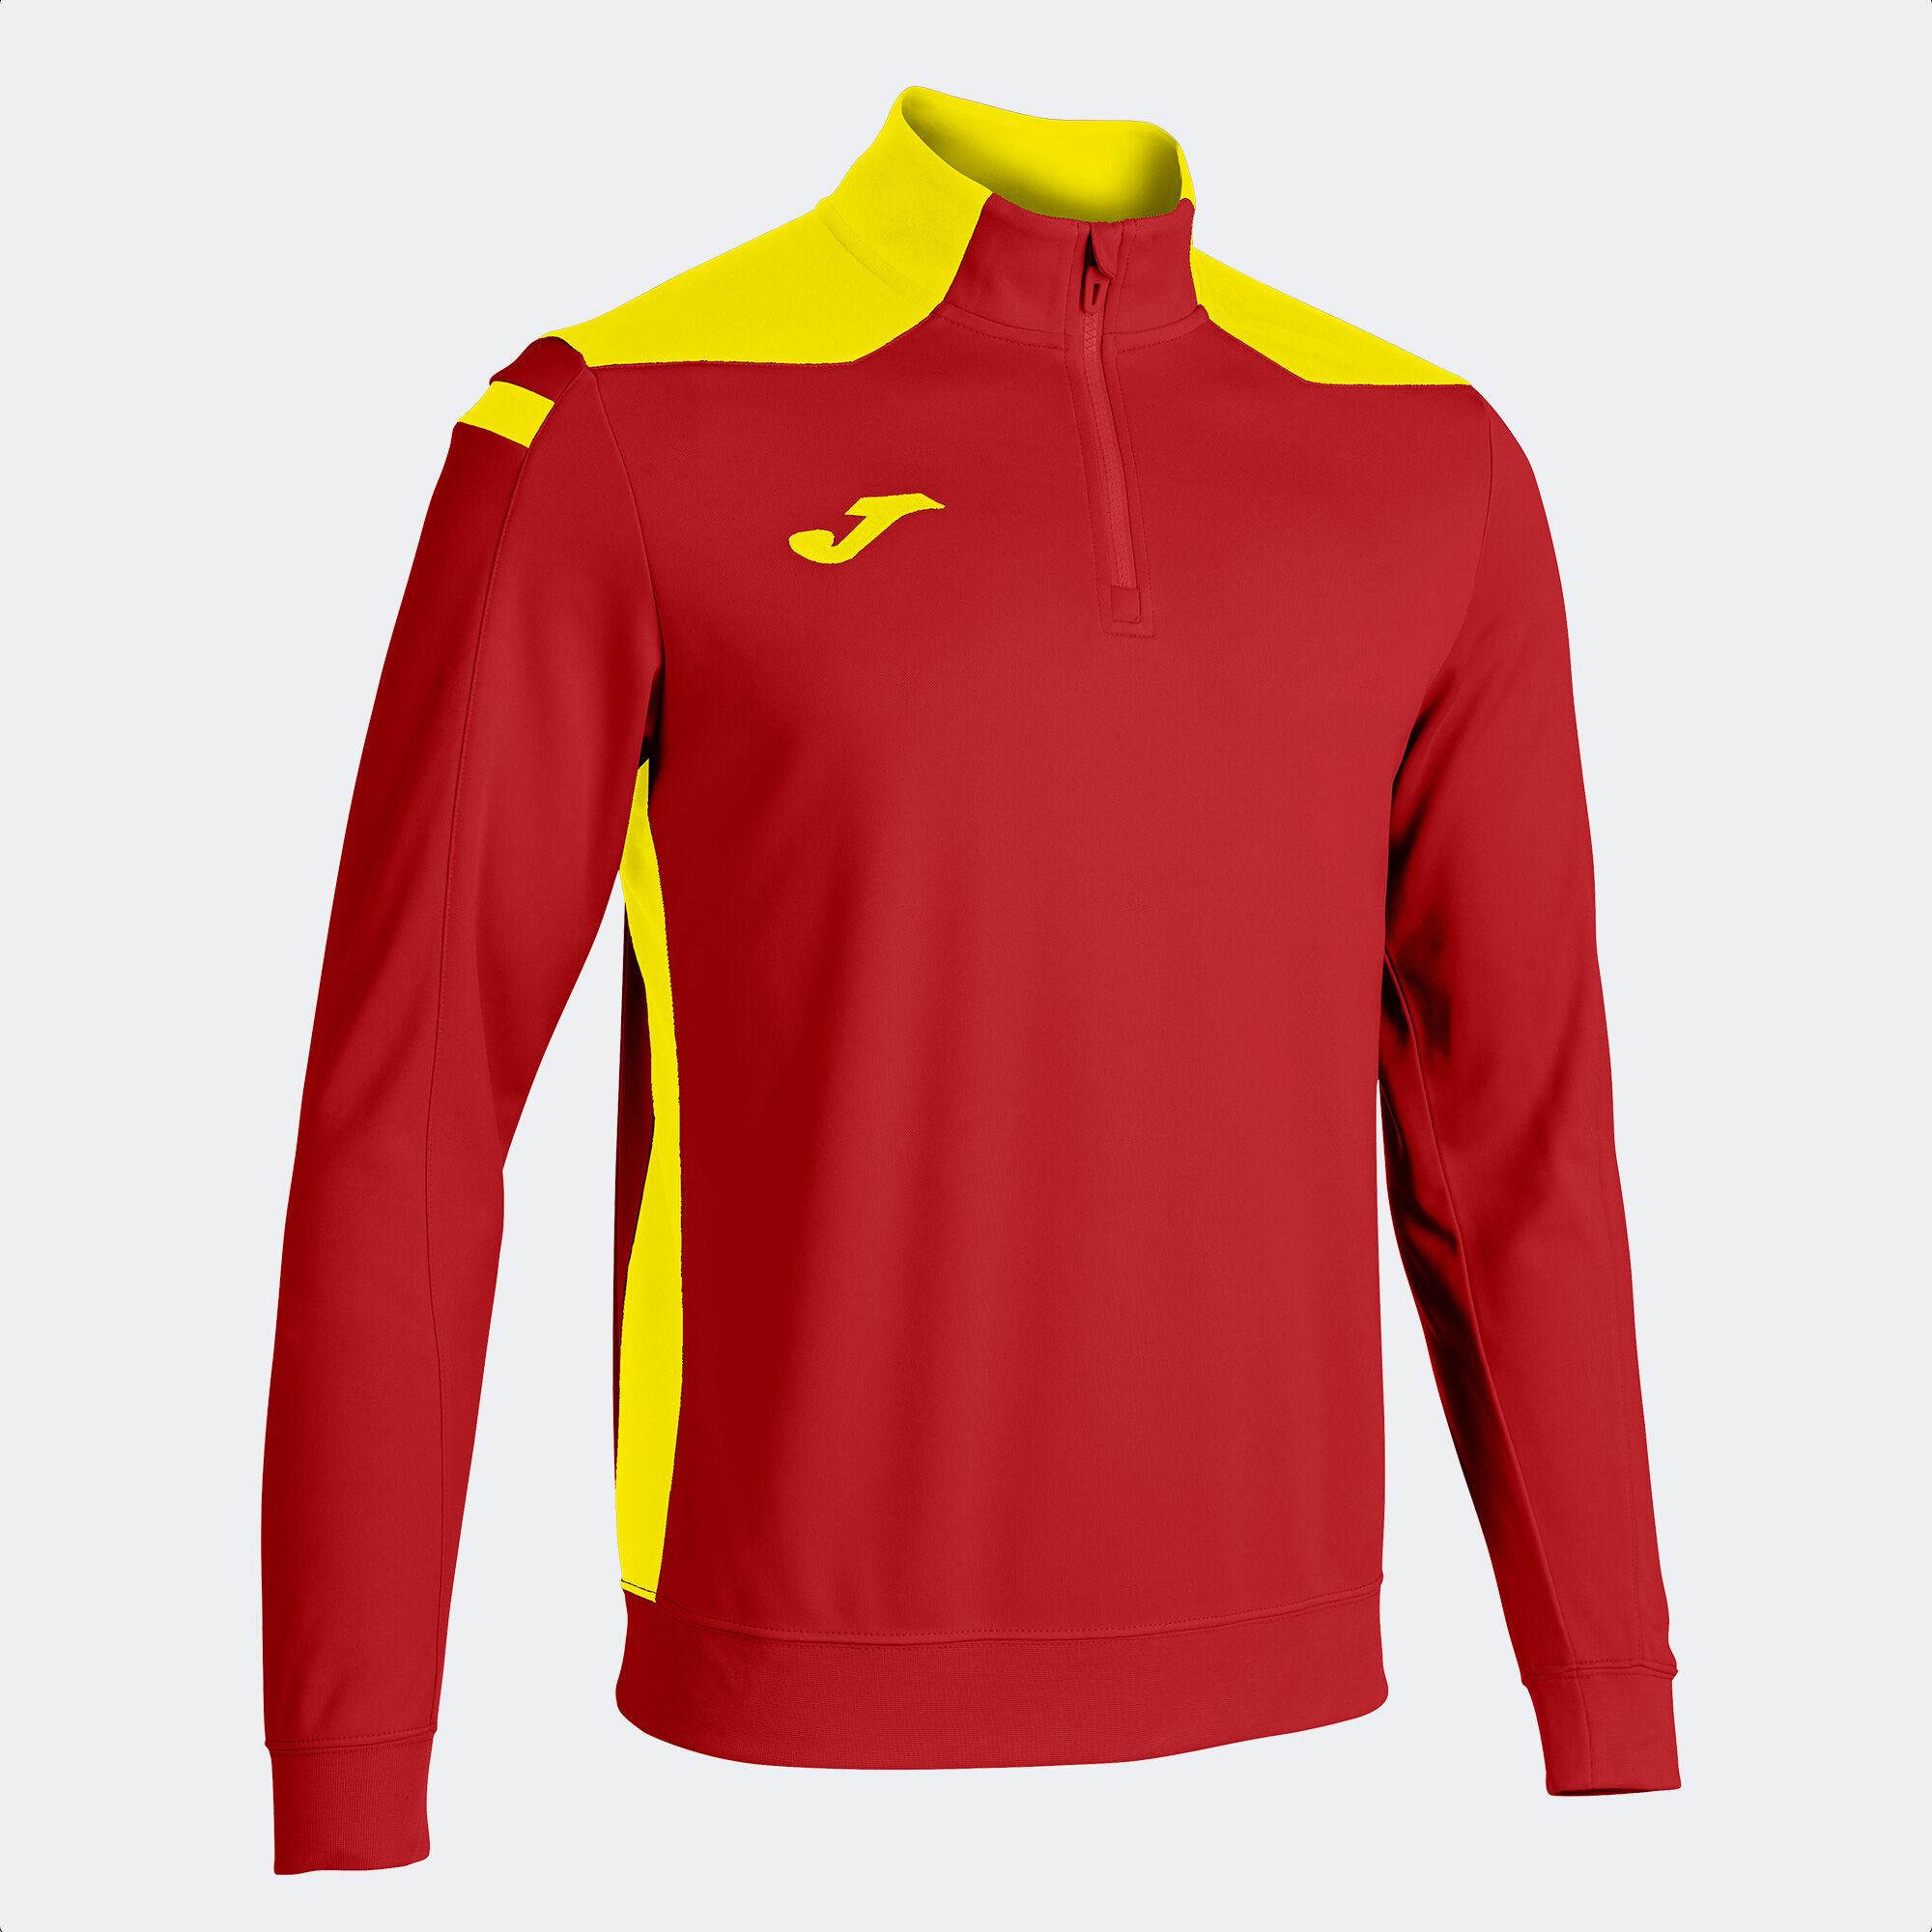 Sweat-shirt homme Championship VI rouge jaune